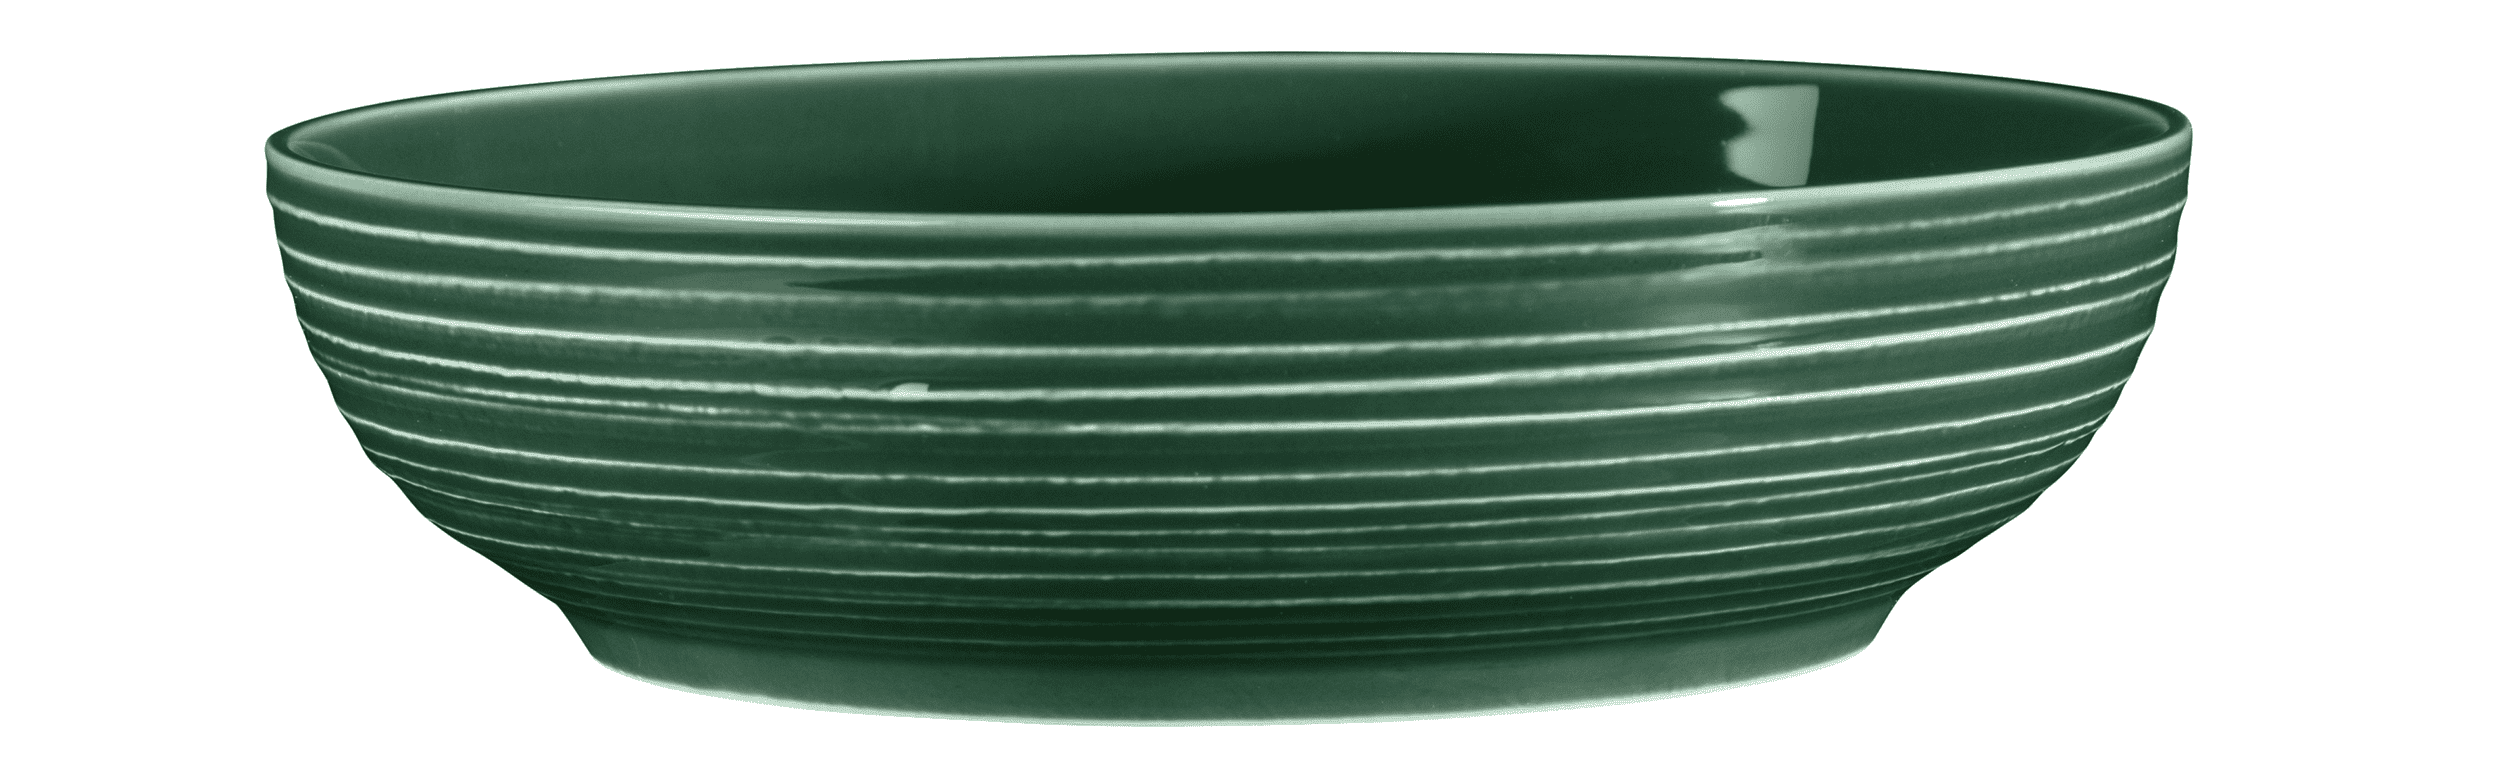 Seltmann Porzellan Terra Moosgrün Foodbowl 25 cm